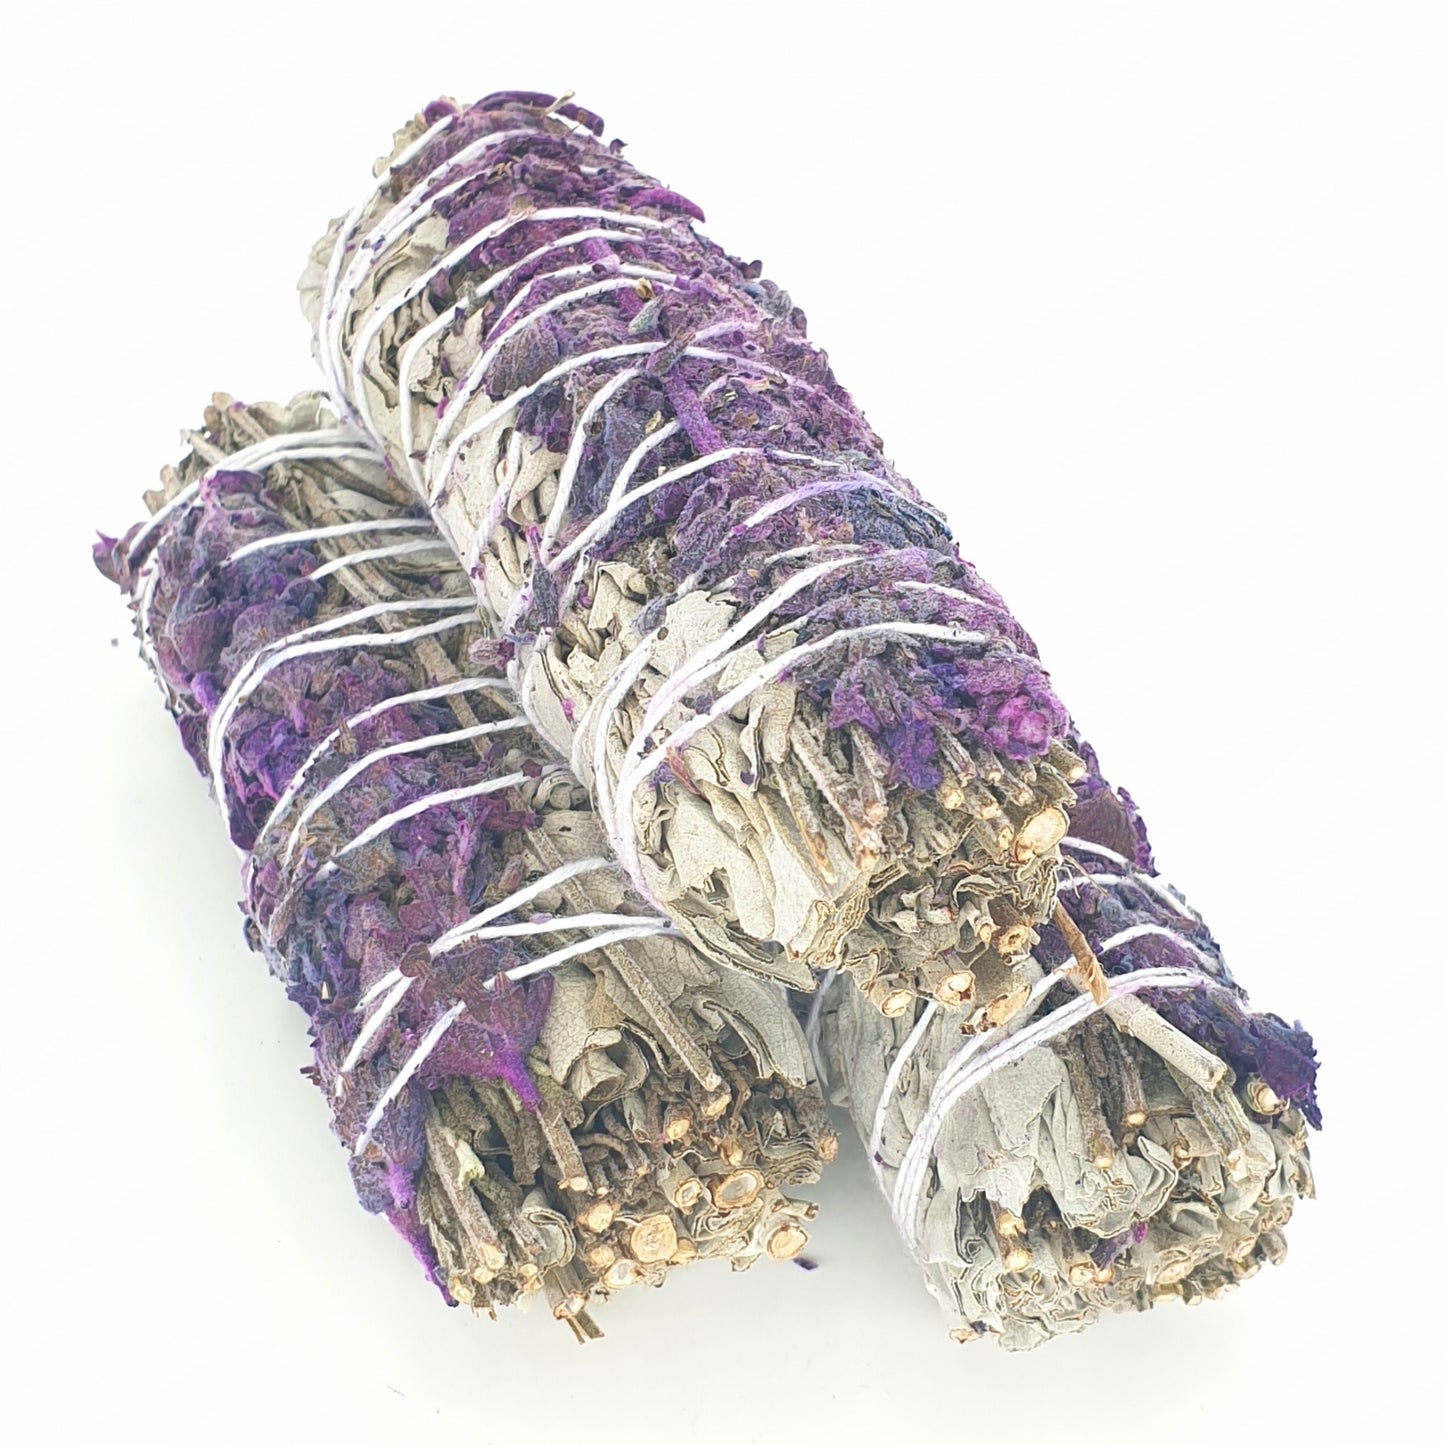 White sage &amp; lavender smudge incense bundle approx. 30g 